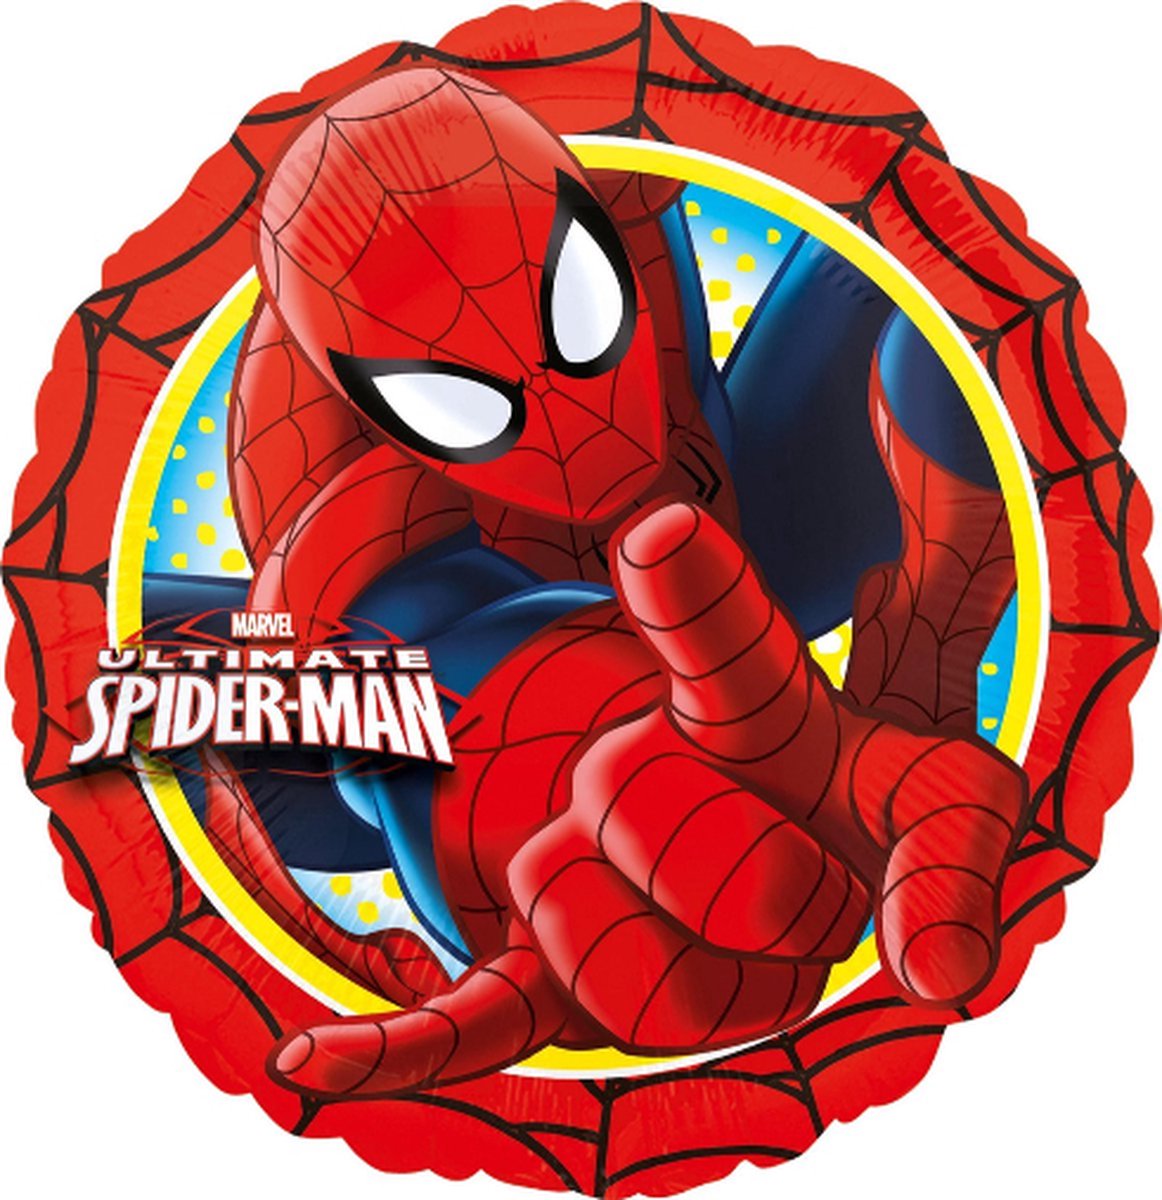 Spiderman ballon set - 73x43cm - Folie Ballon - Superhelden - Themafeest - Verjaardag - Ballonnen - Versiering - Helium ballon